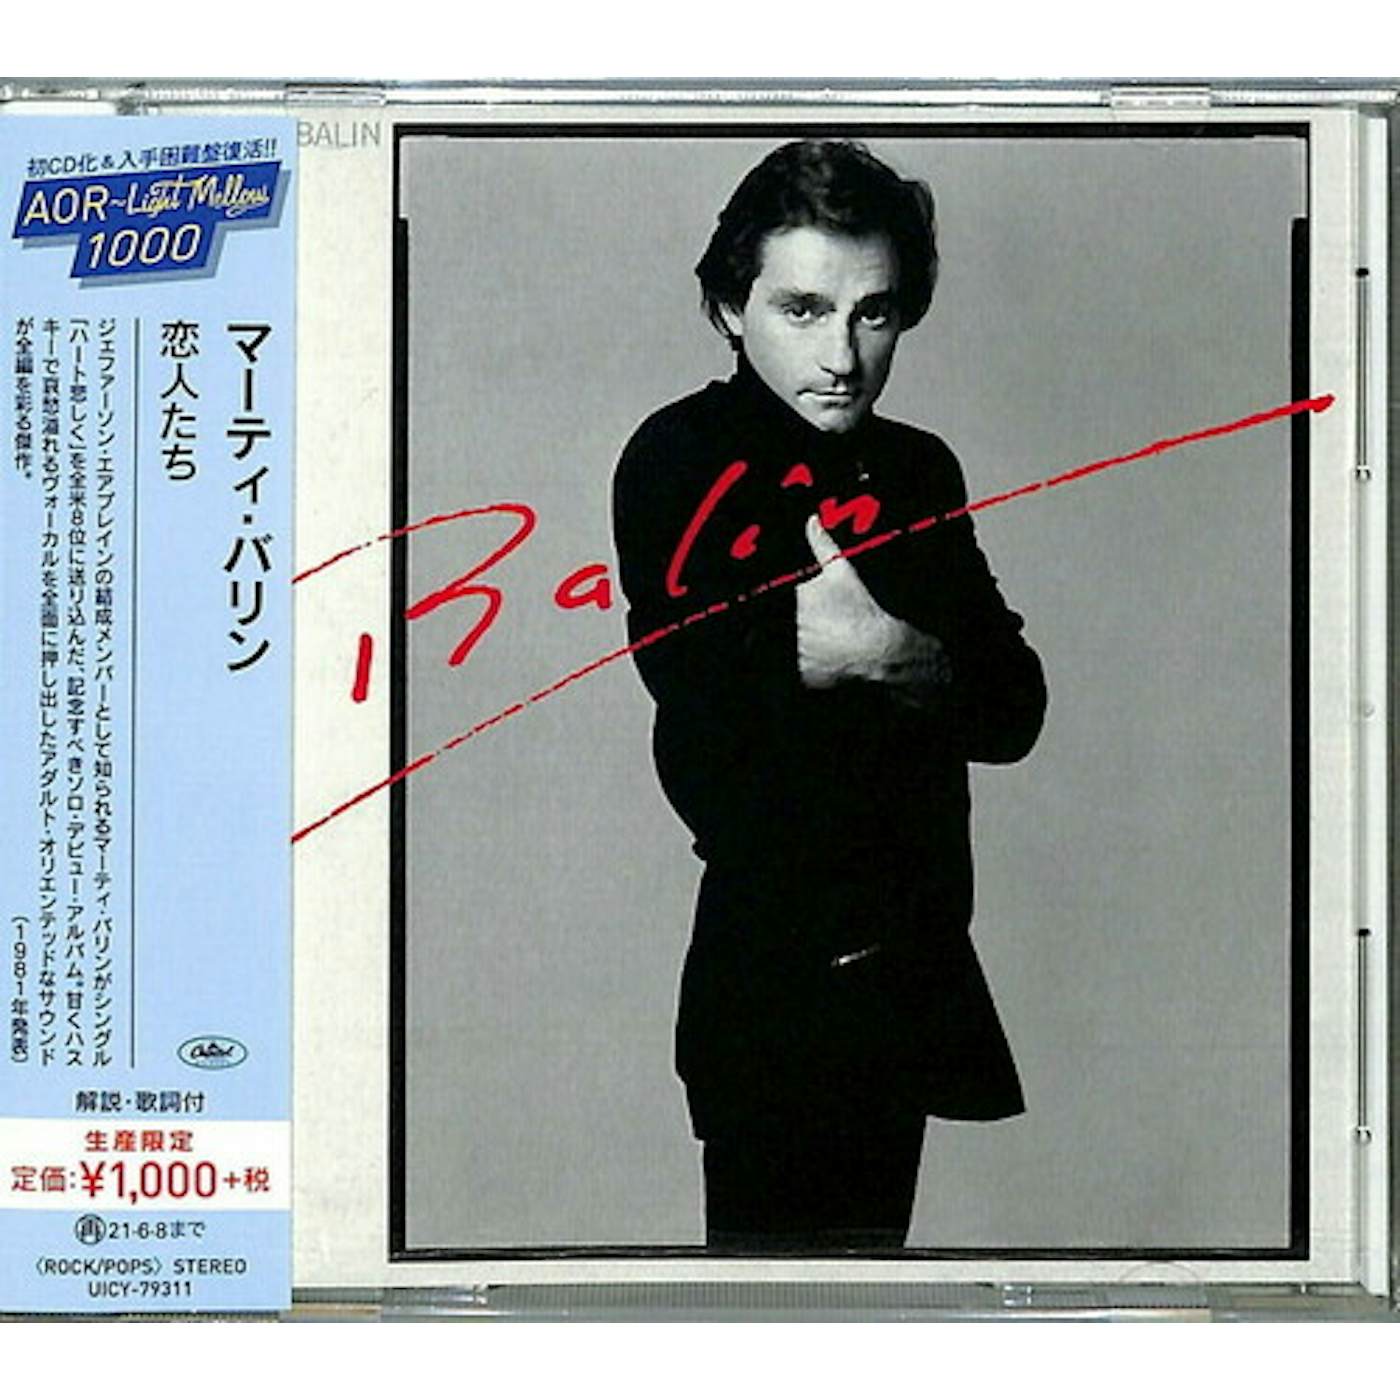 Marty Balin BALIN CD